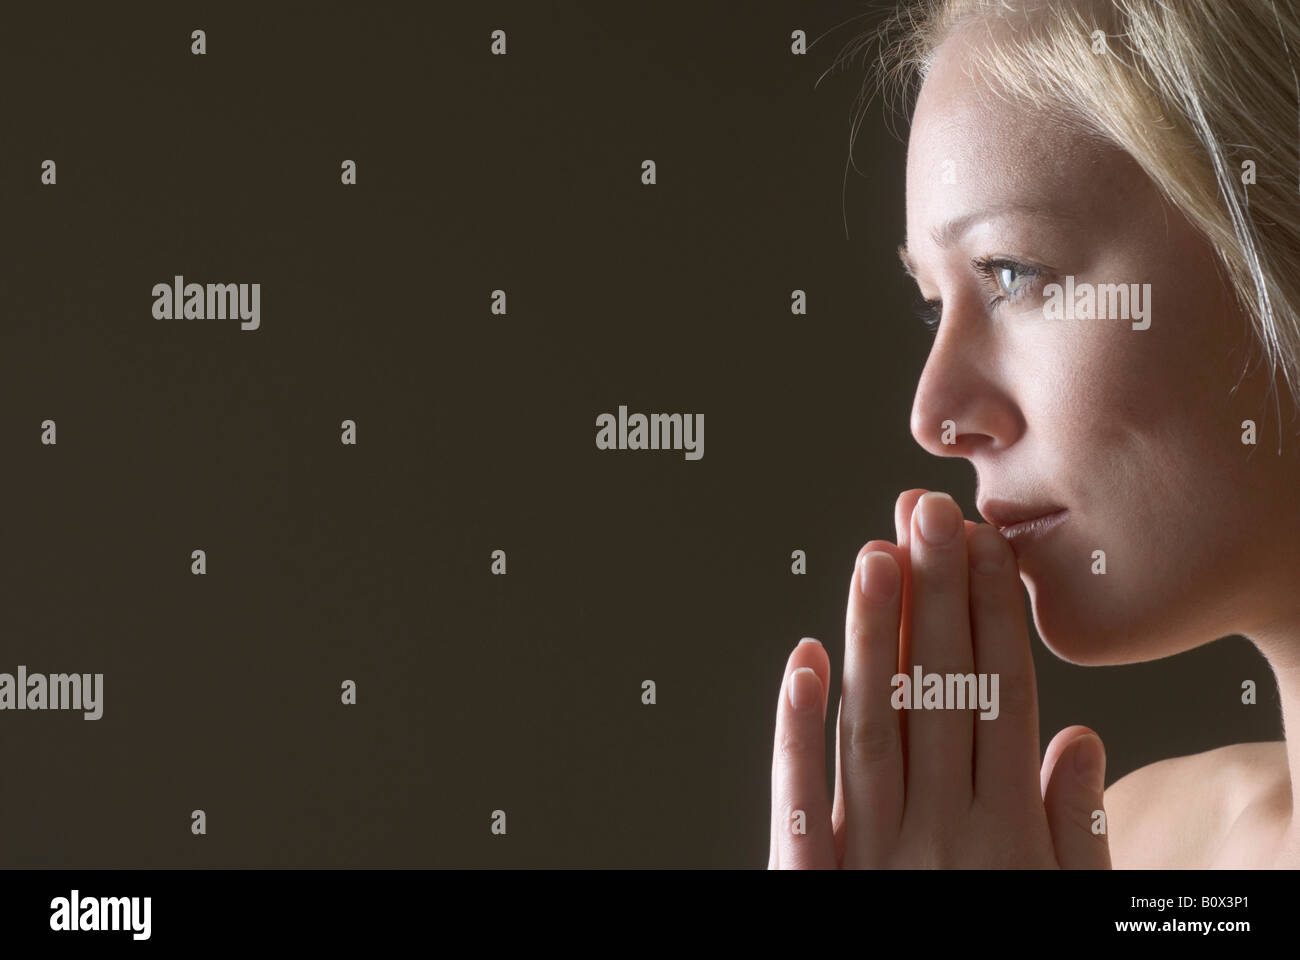 Profile of a woman praying Stock Photo